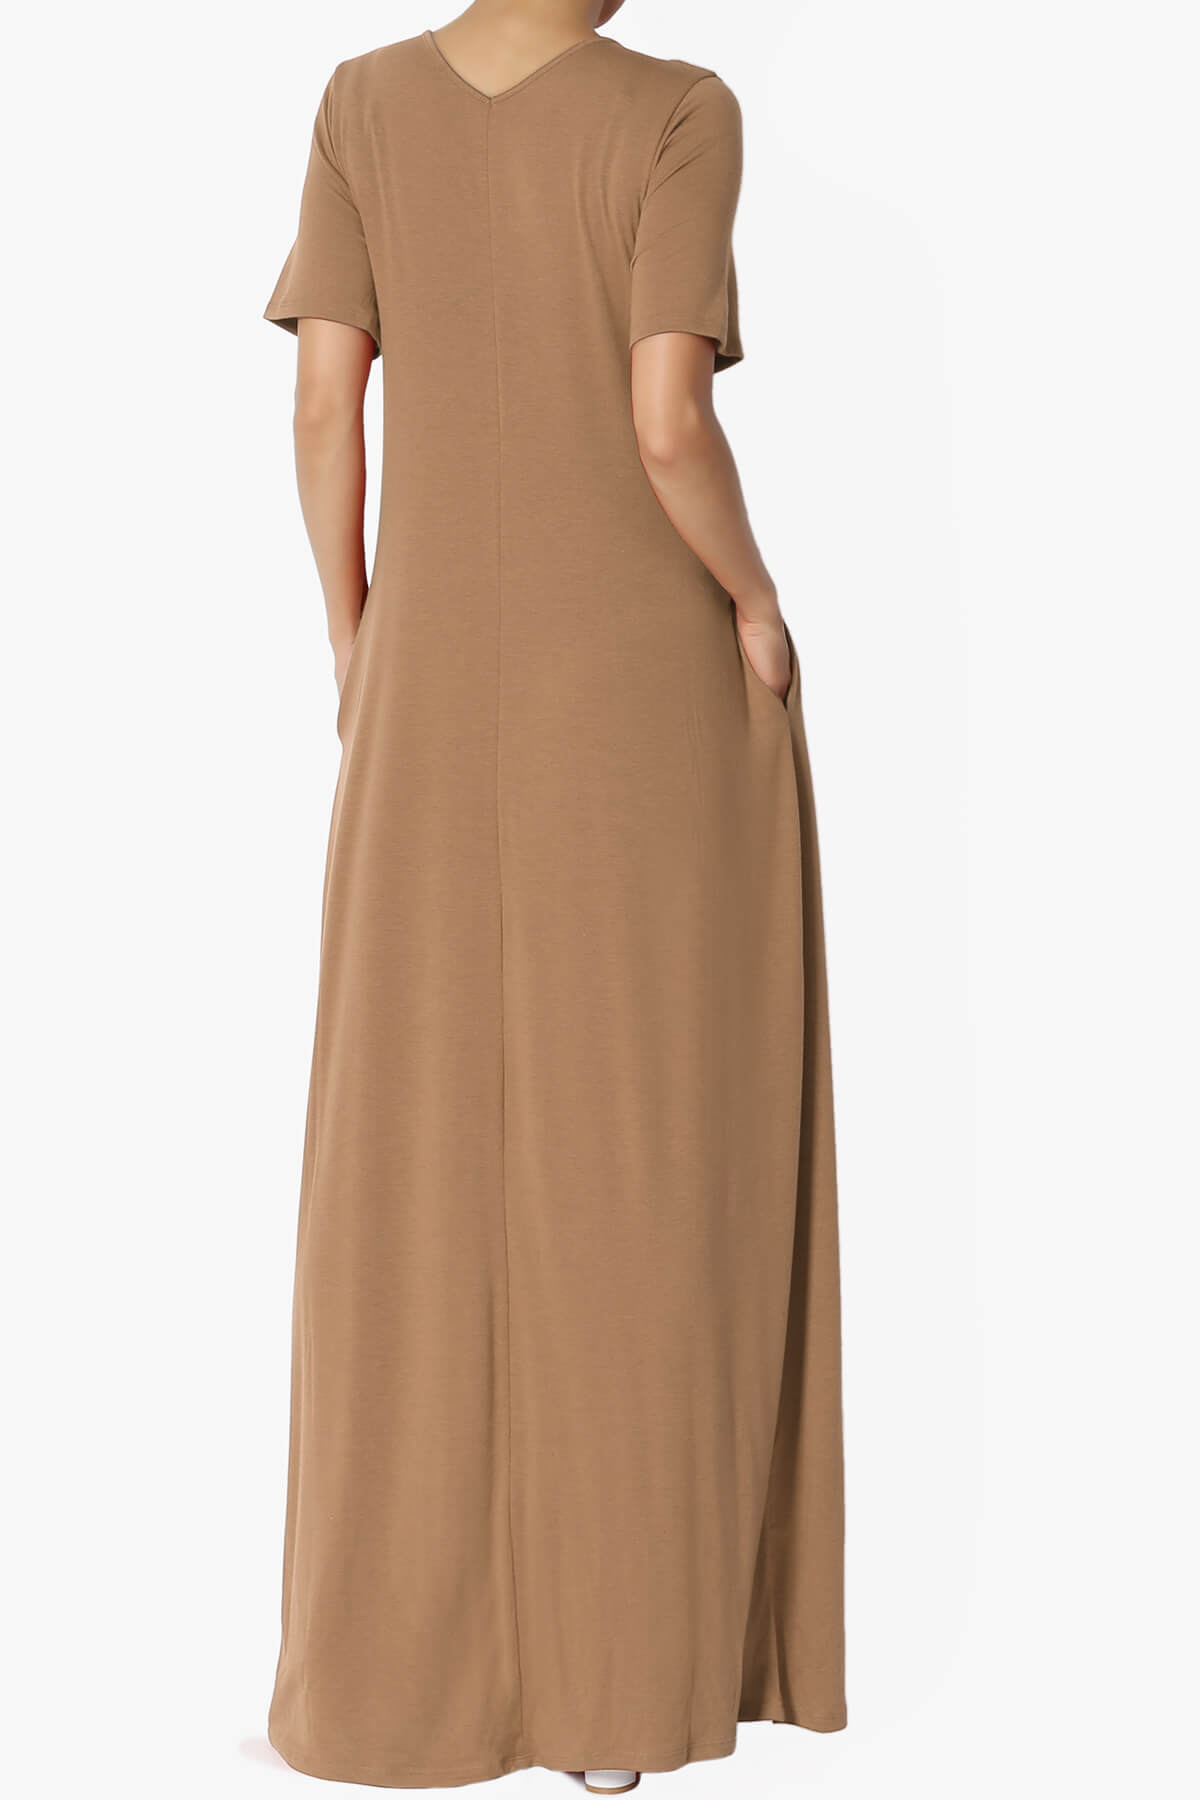 Load image into Gallery viewer, Vina Pocket Oversized Maxi Dress DEEP CAMEL_2
